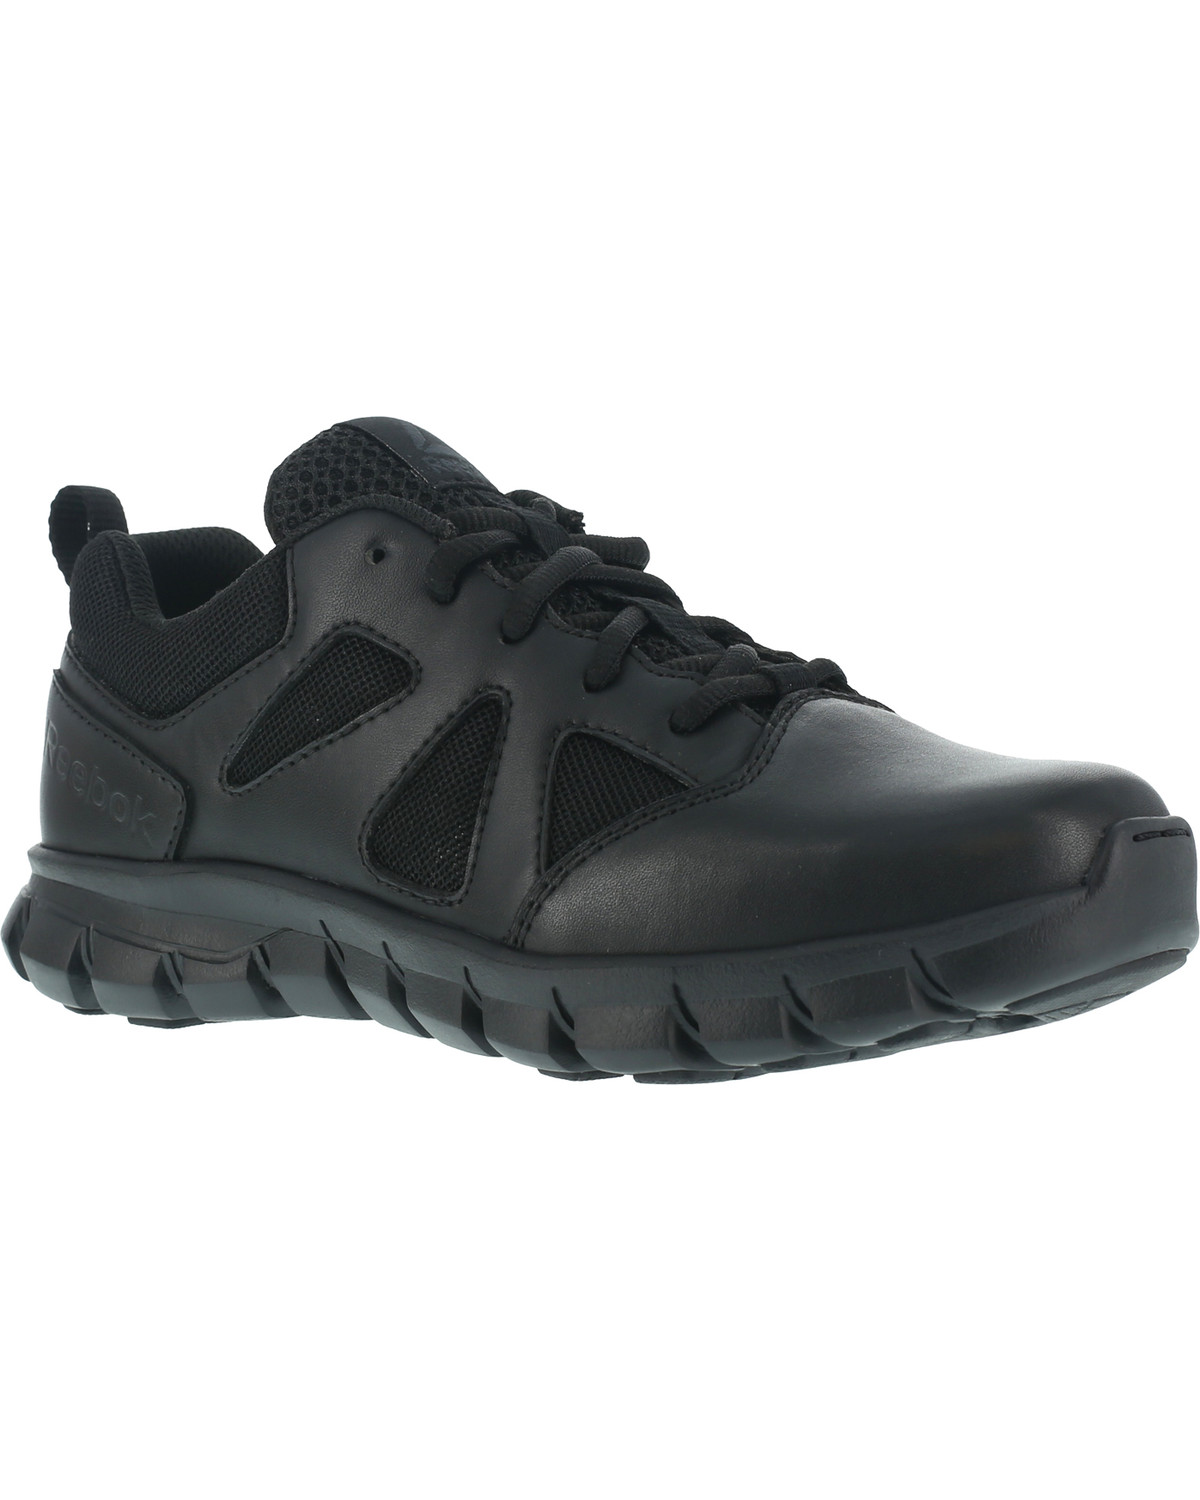 Reebok Men's Sublite Cushion Tactical Oxford Shoes - Soft Toe